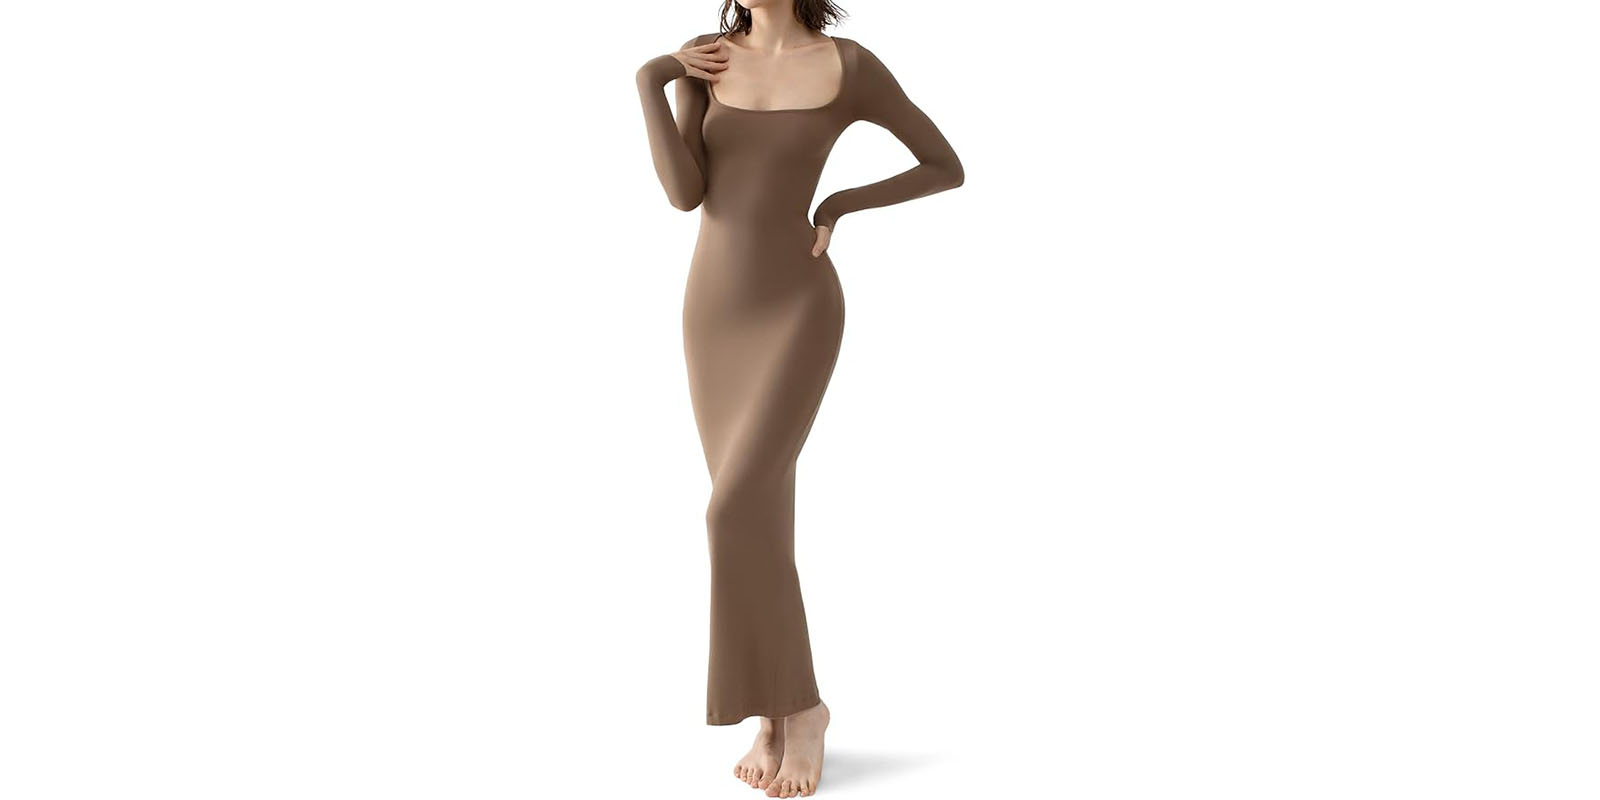 I got an  dupe for Kim Kardashian's viral Skims dress - it